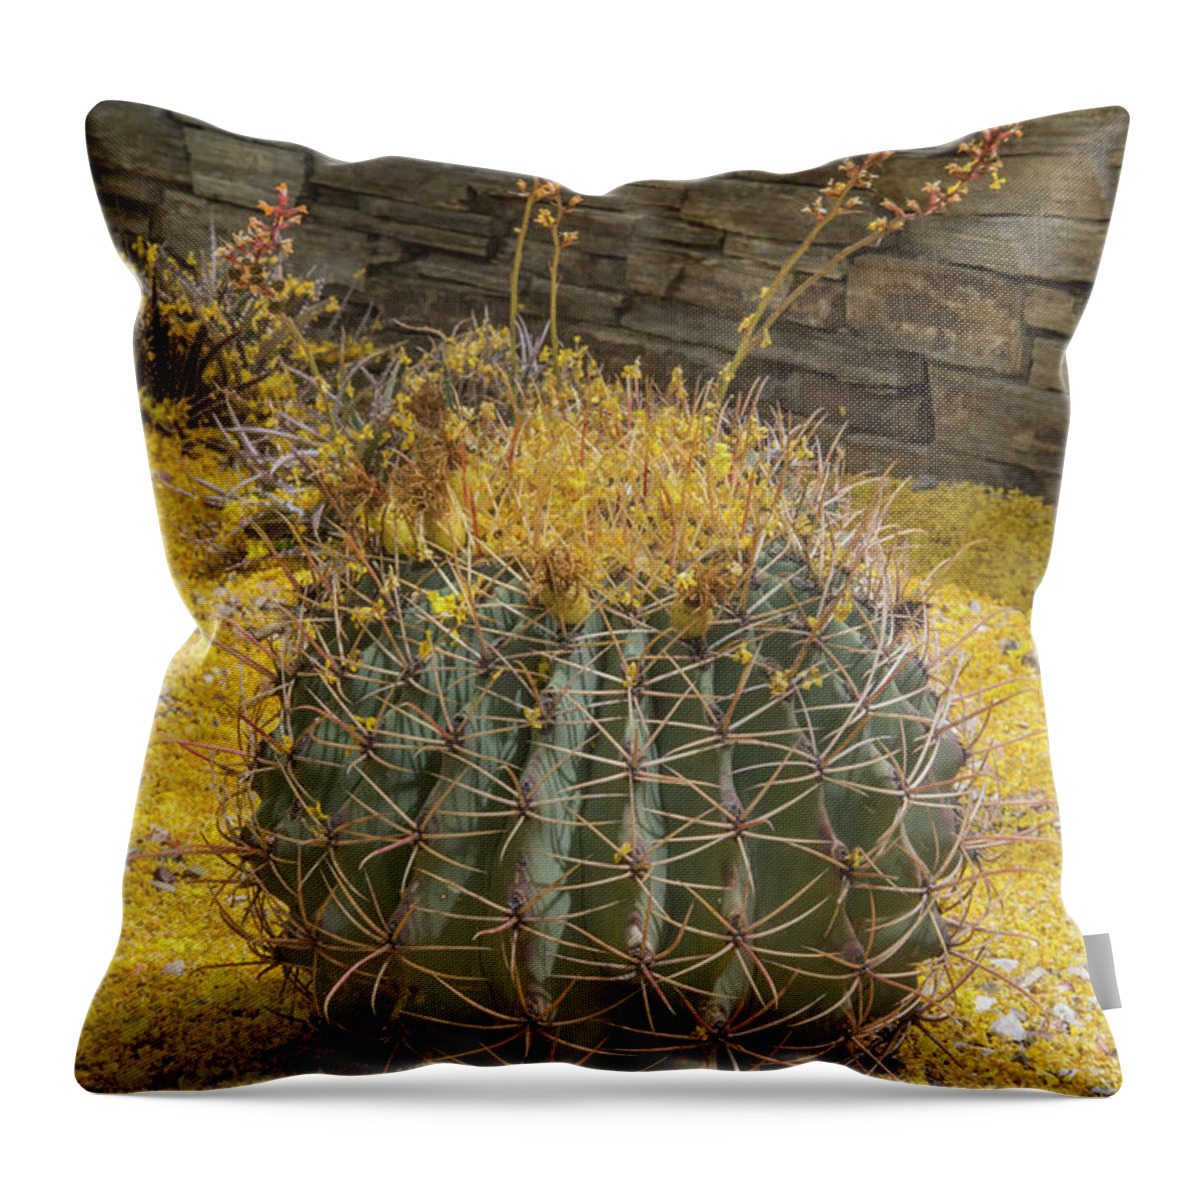 Cactus Throw Pillow featuring the photograph Cactus 5940-041118-1 by Tam Ryan